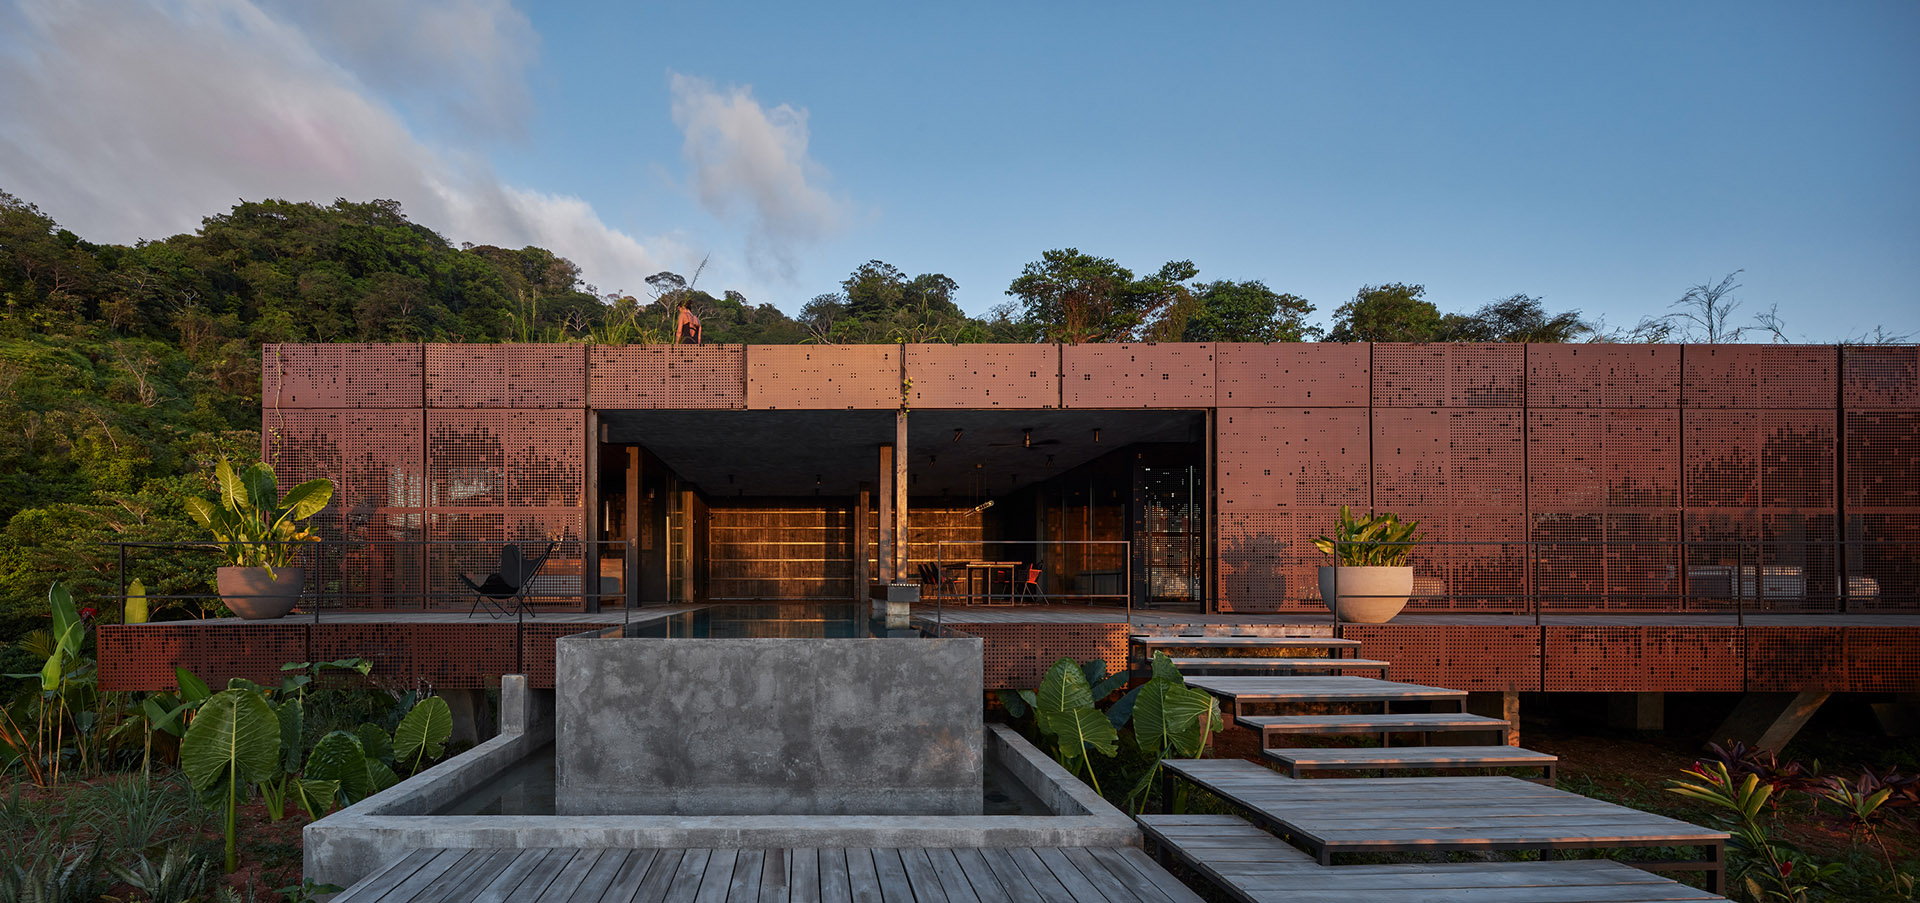 Art Villas Costa Rica, facade perforated in corten